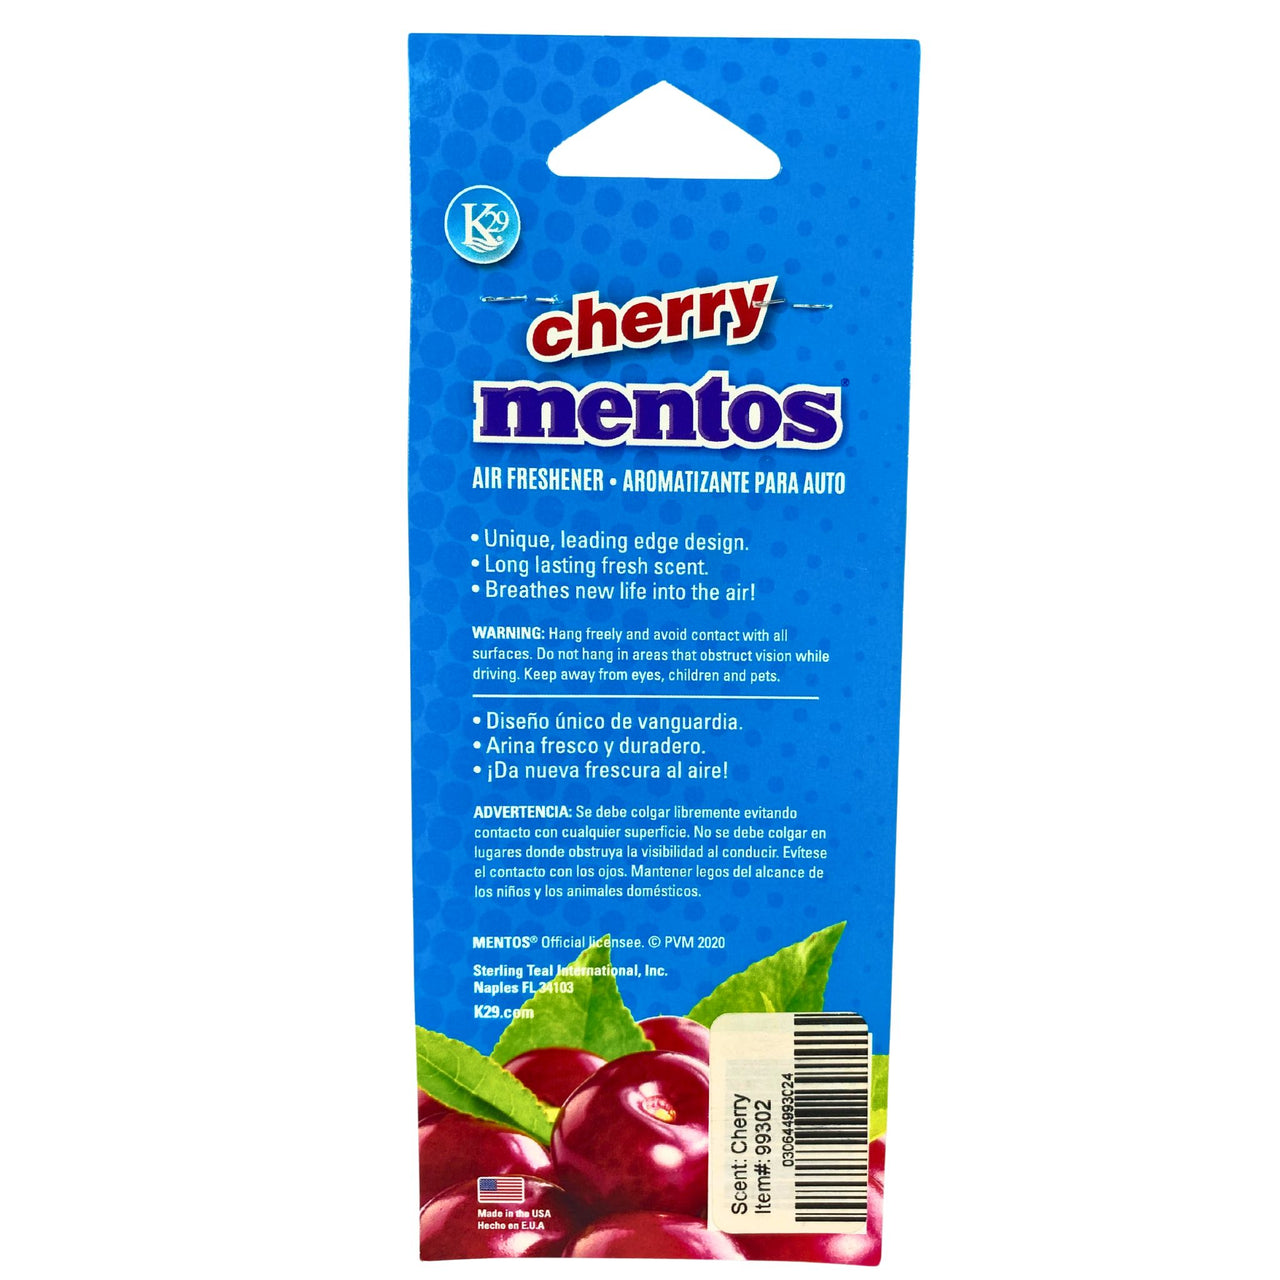 Mentos Cherry Air Freshener